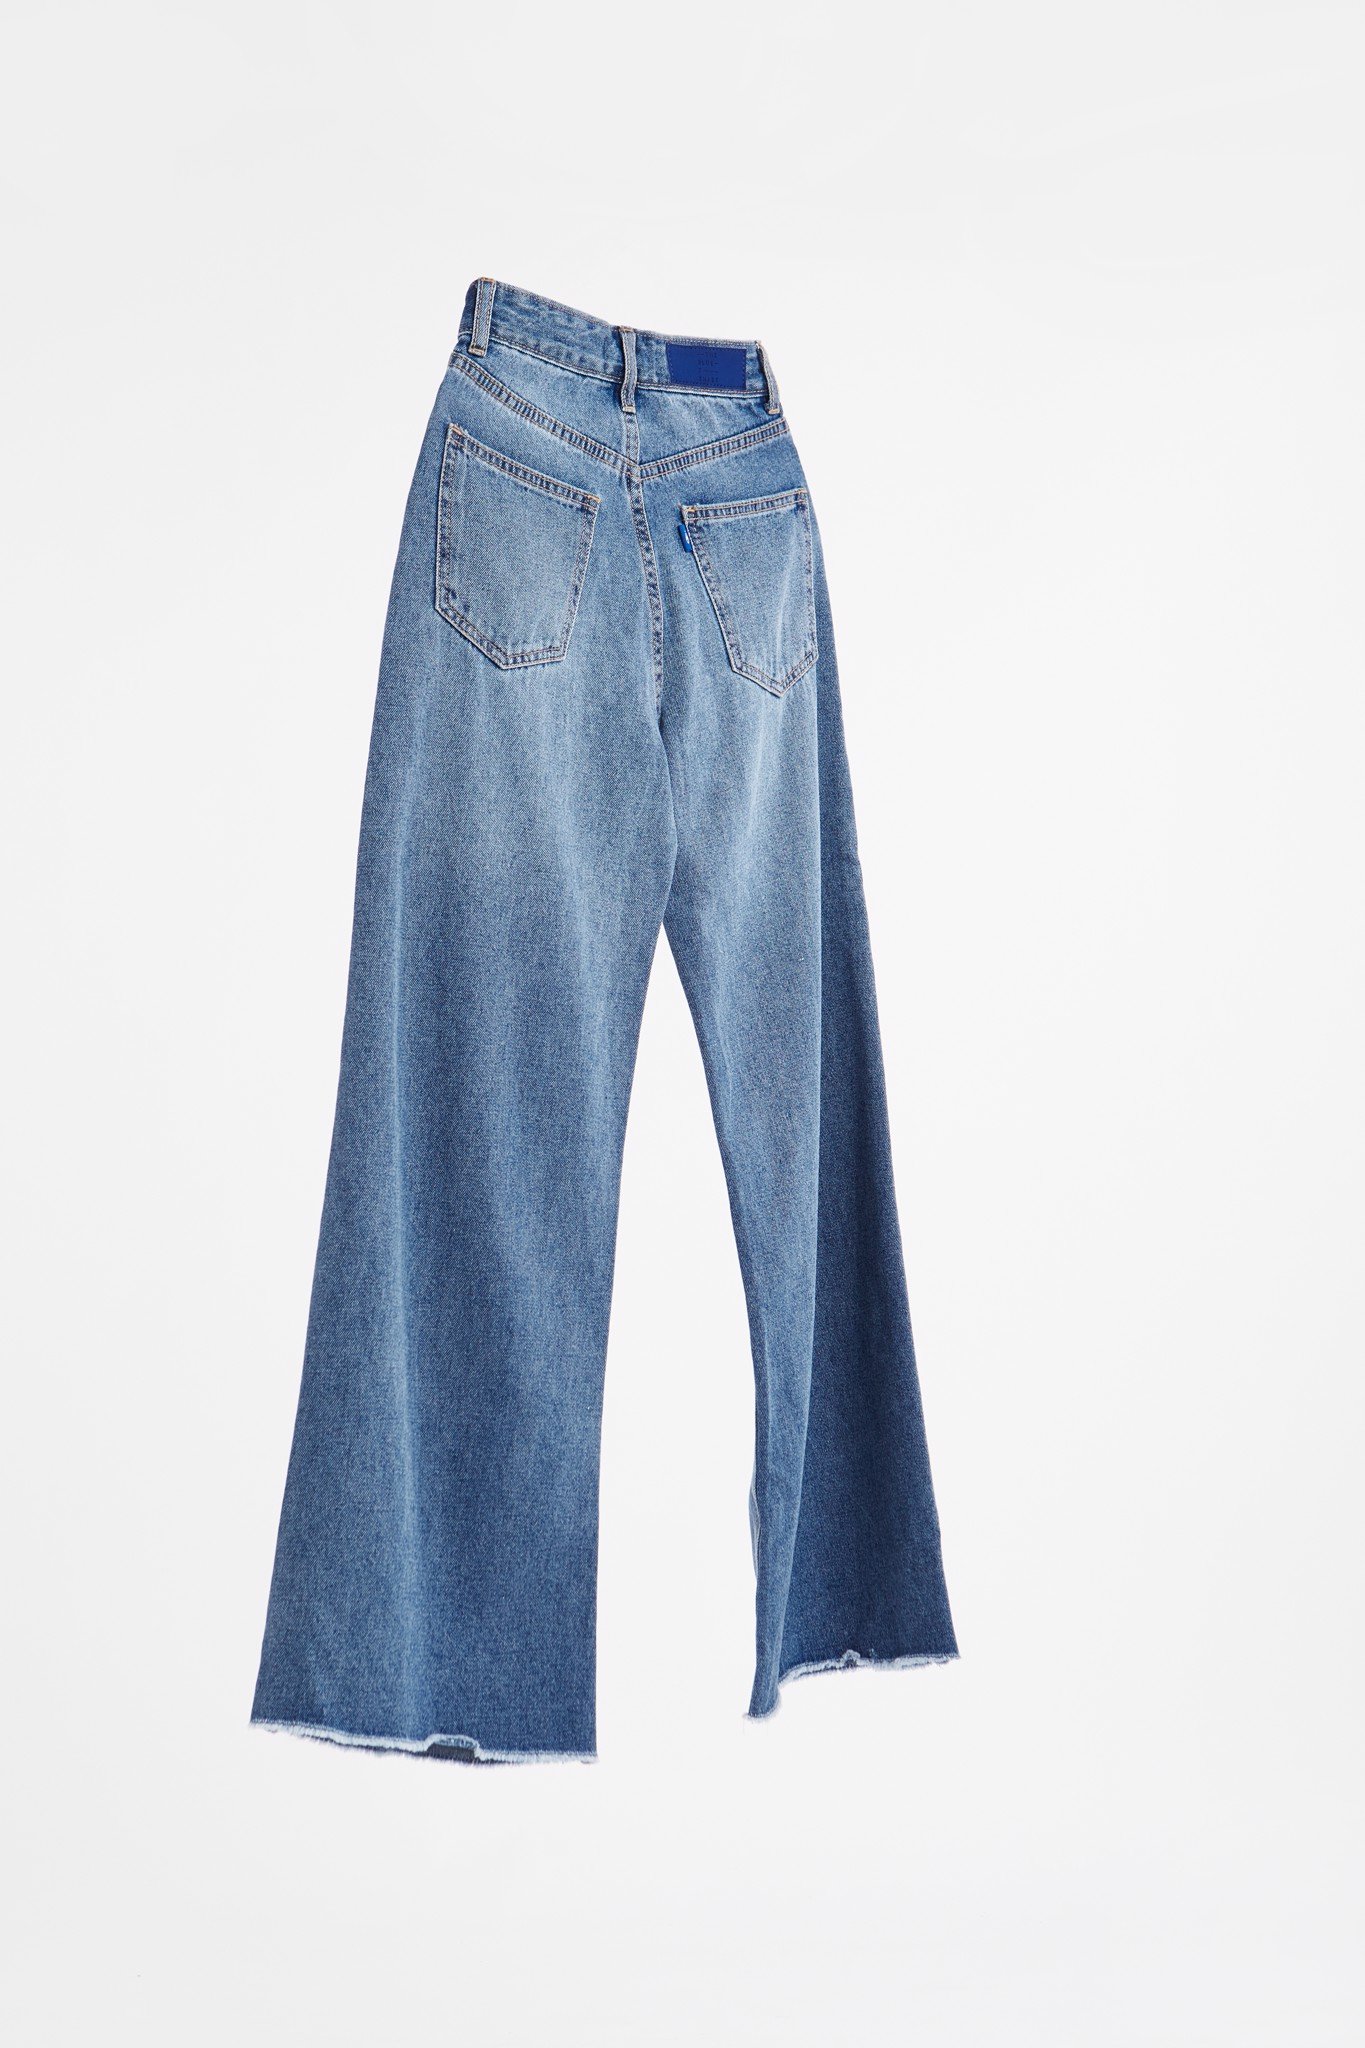 [MUA 1 TẶNG 1 T-SHIRT] TheBlueTshirt - Quần Jeans Nữ Ống Rộng - City Wide Leg Jeans - True Wash